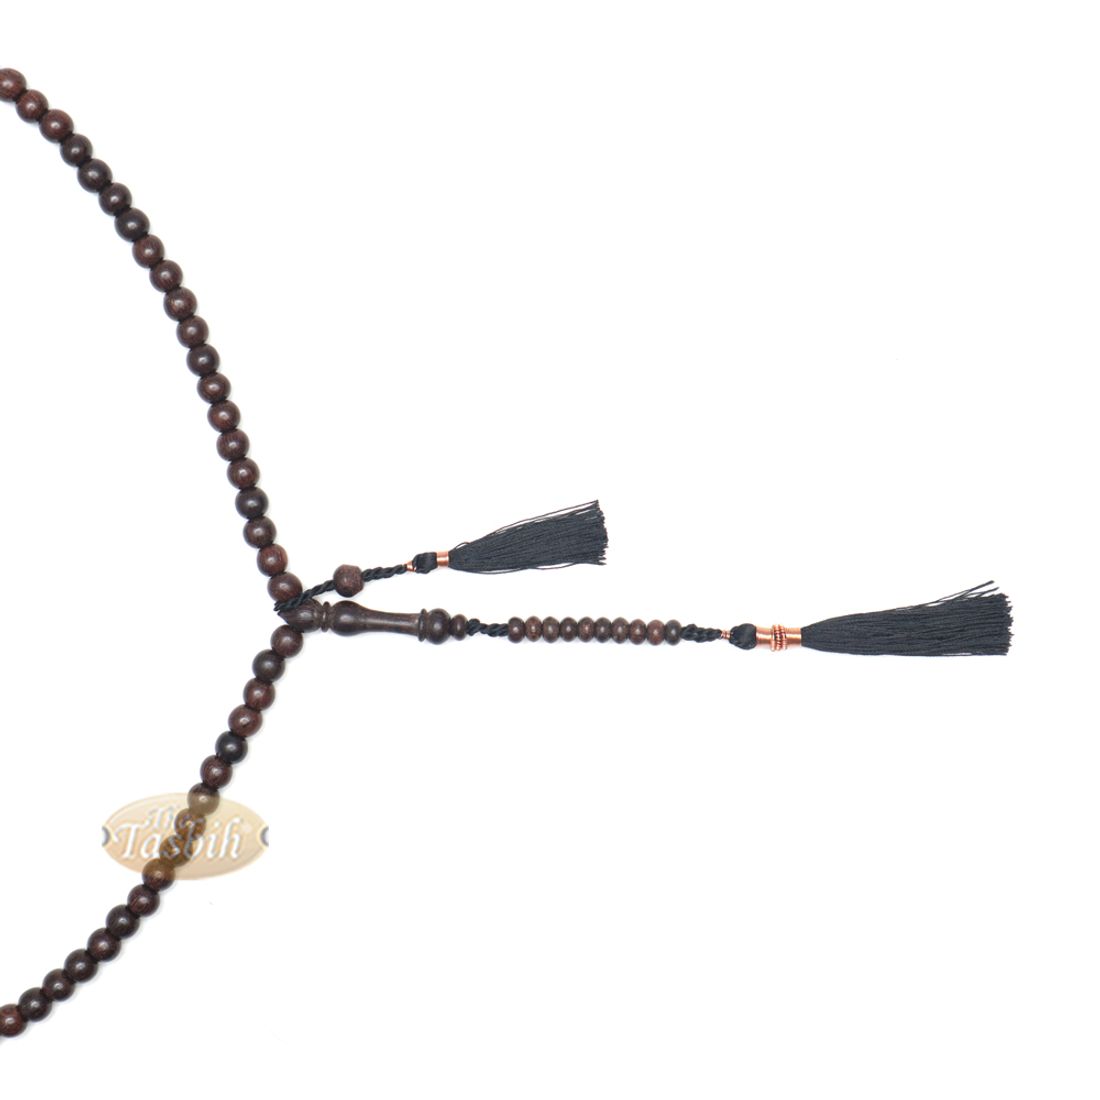 Muslim Tasbih Prayer Necklace – 8mm Tamarind Wood 100-beads with Black Tassels